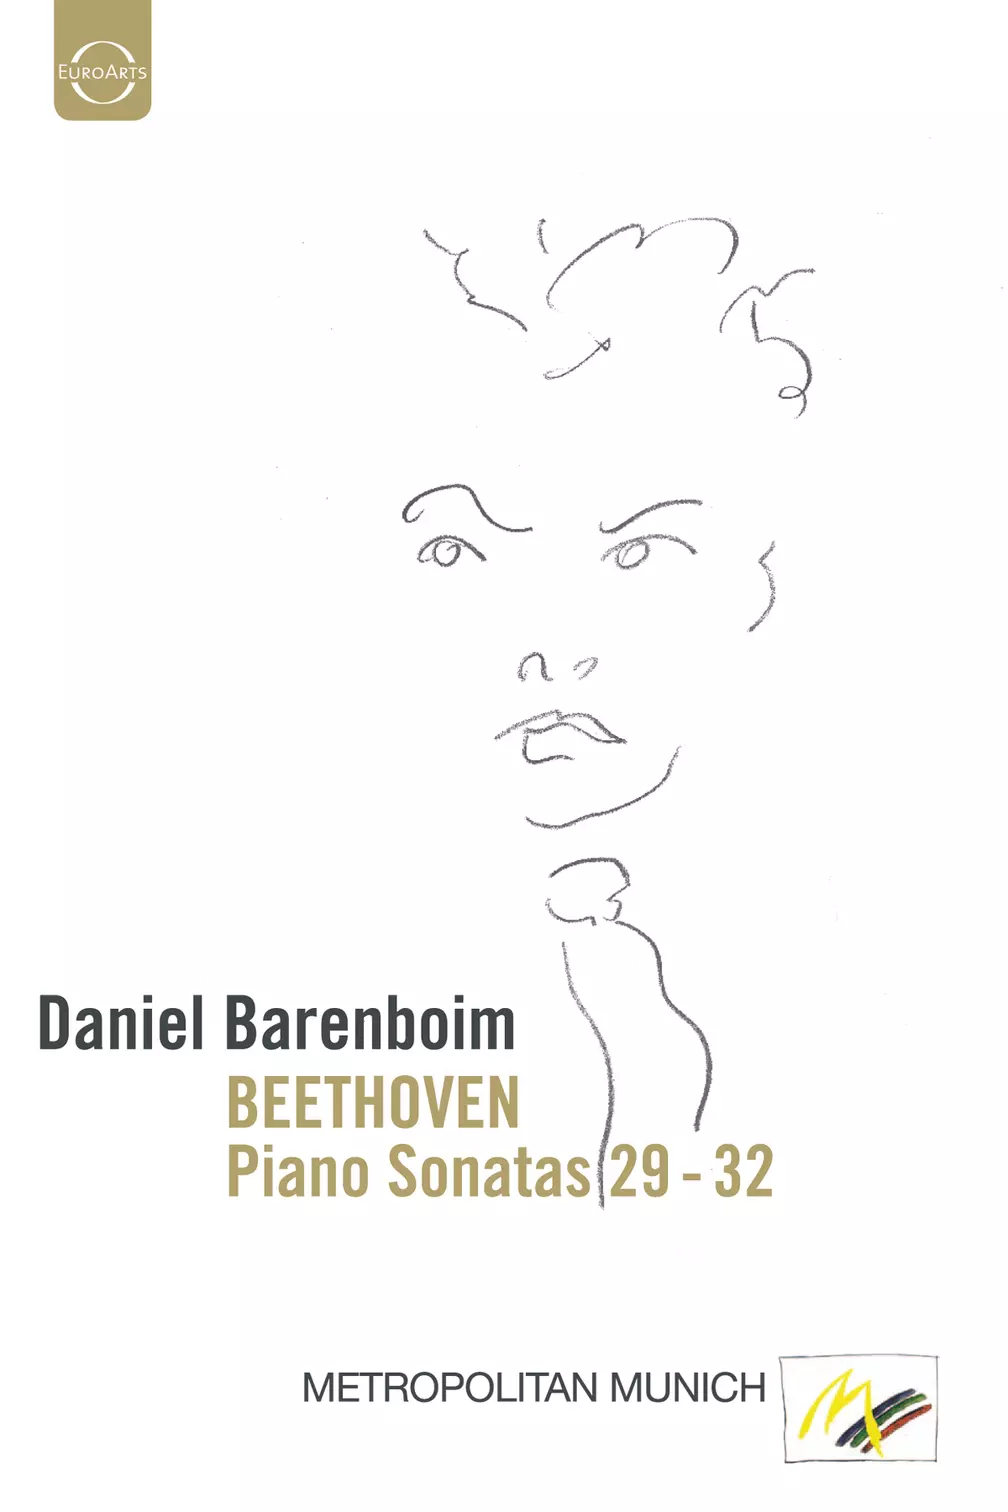 Barenboim plays Beethoven Piano Sonatas Nos. 29-32, Part 5/5